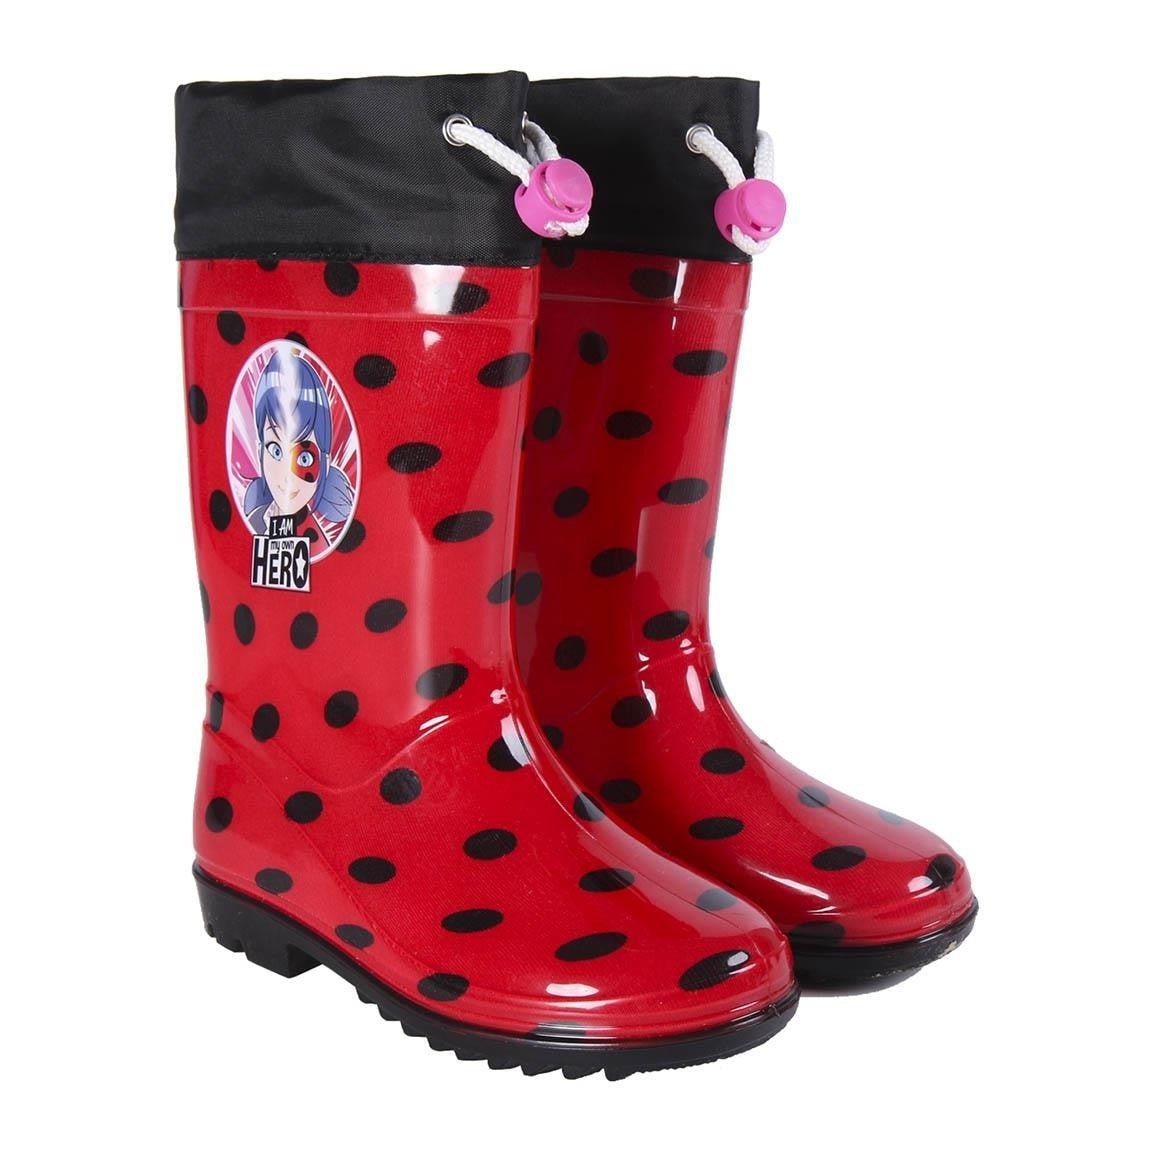 Stivali da pioggia Miracolous Ladybug - Mstore016 - sneaker bimba - Lady Bug